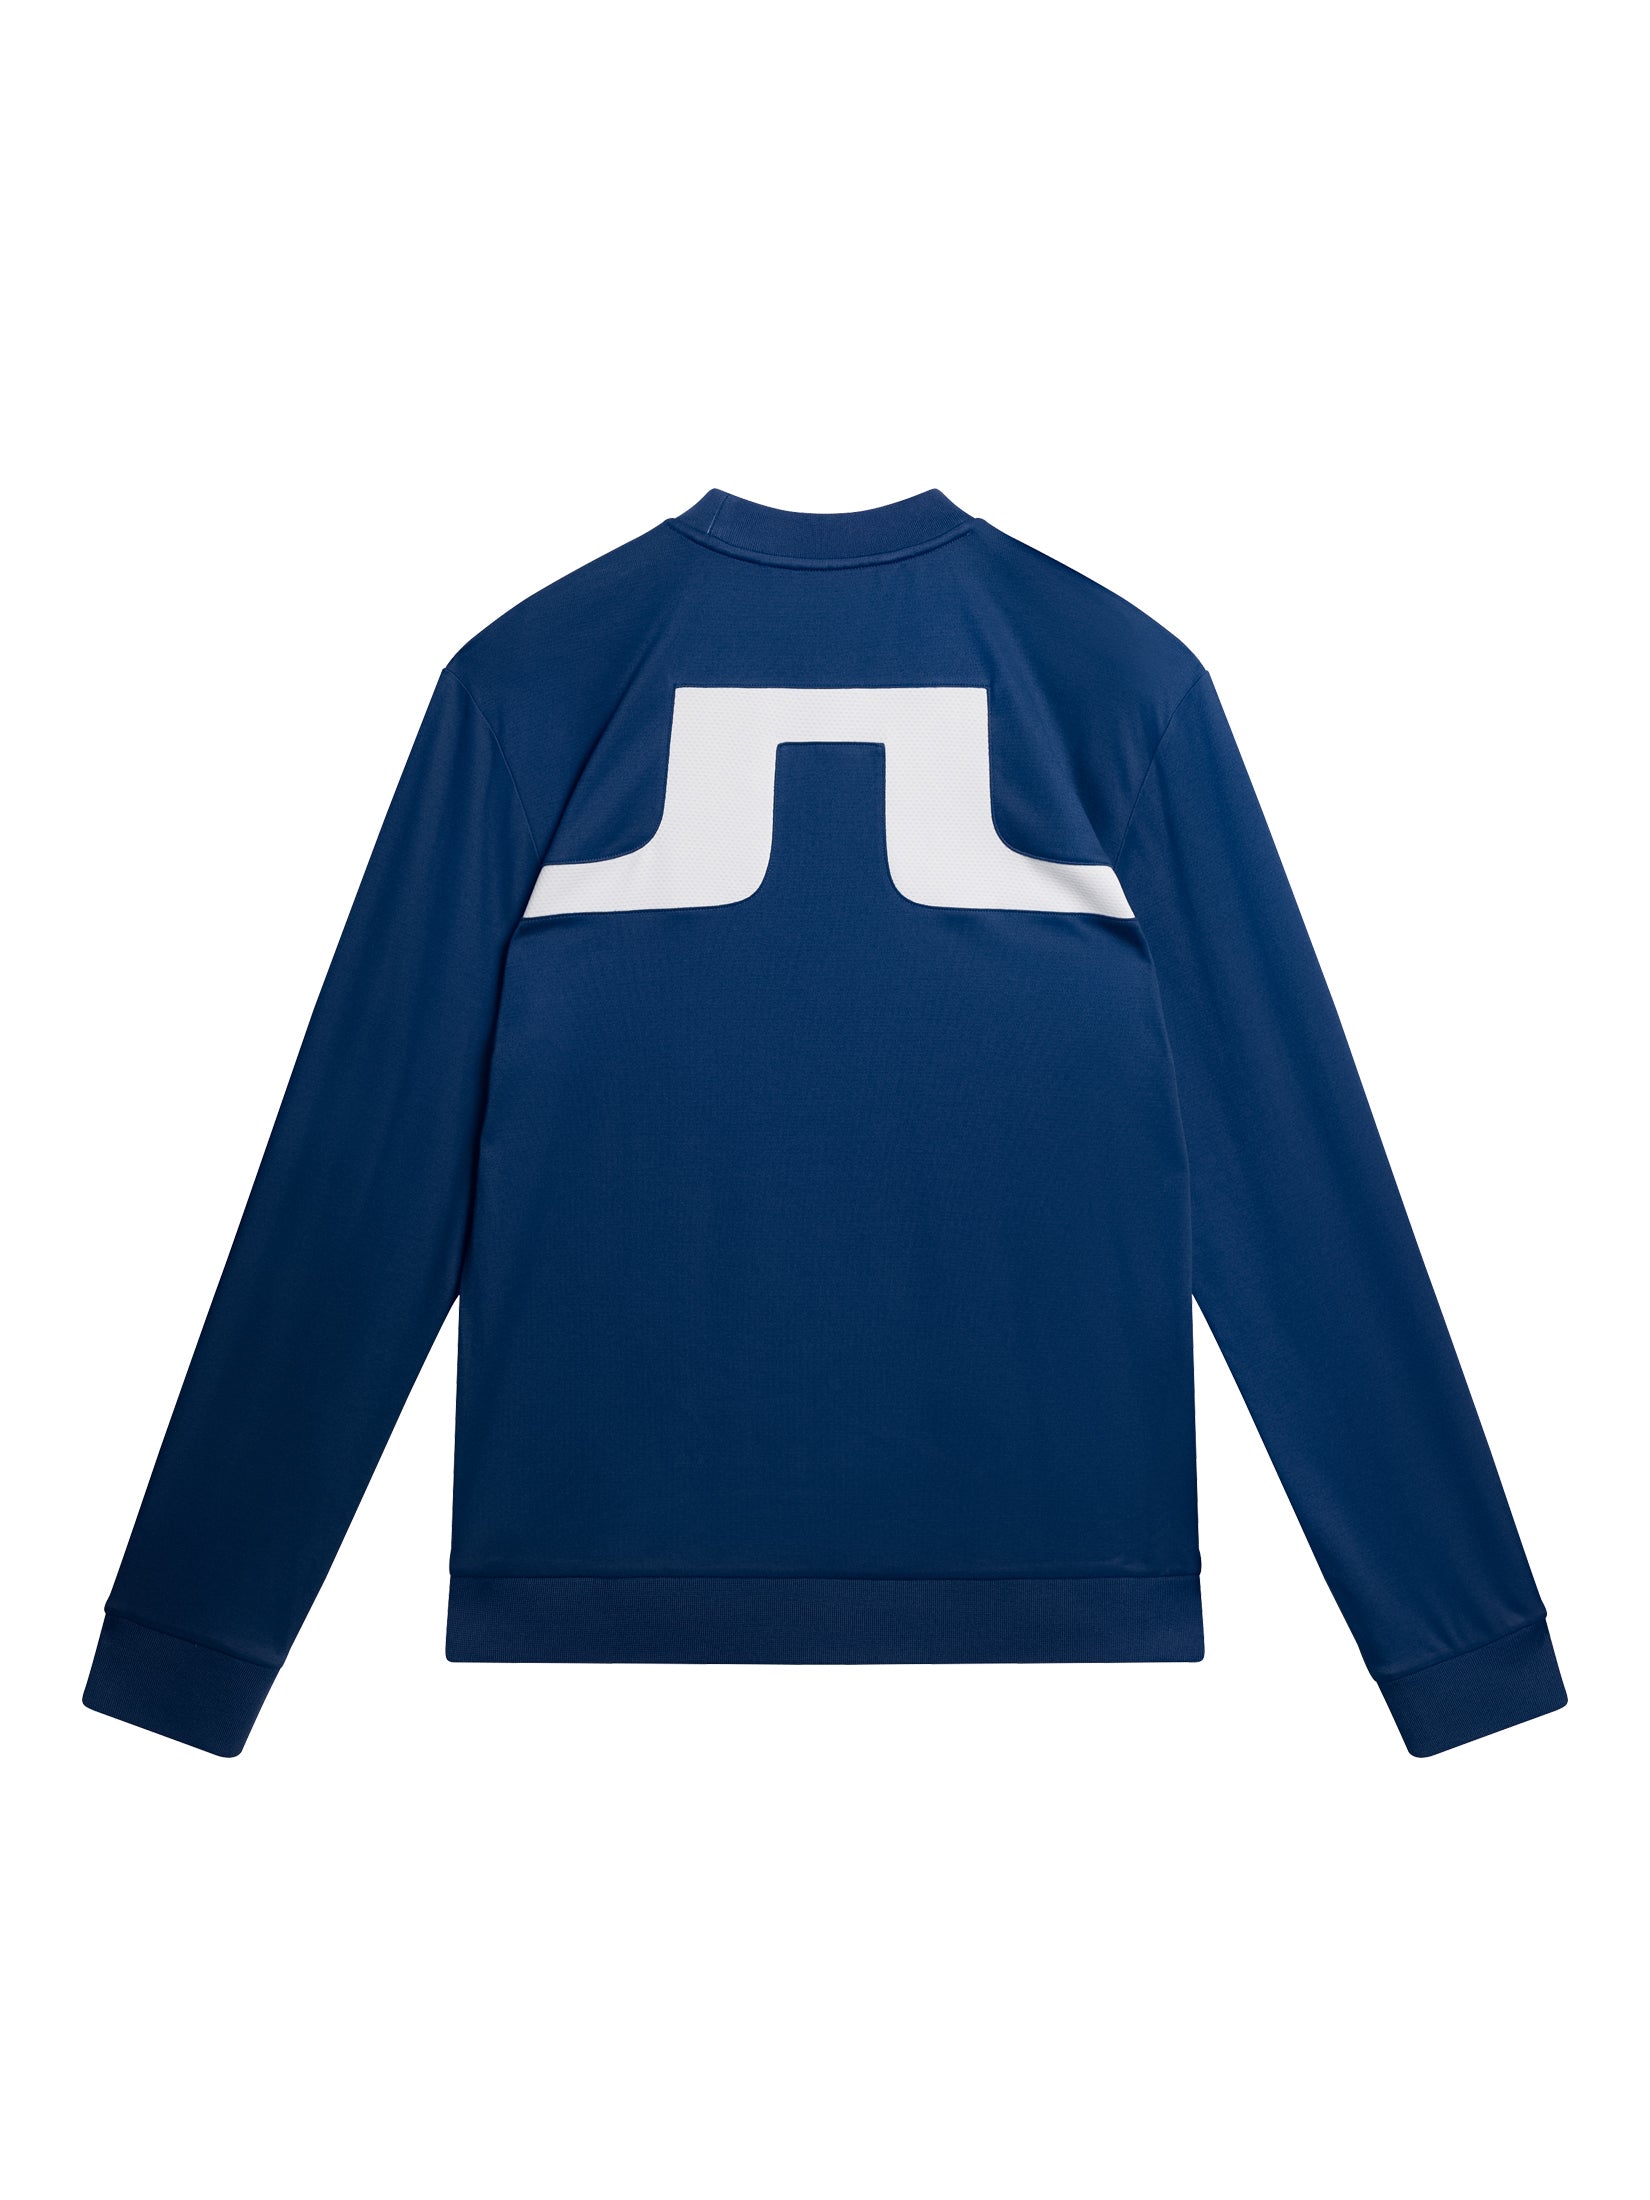 Jones Jersey Sweater